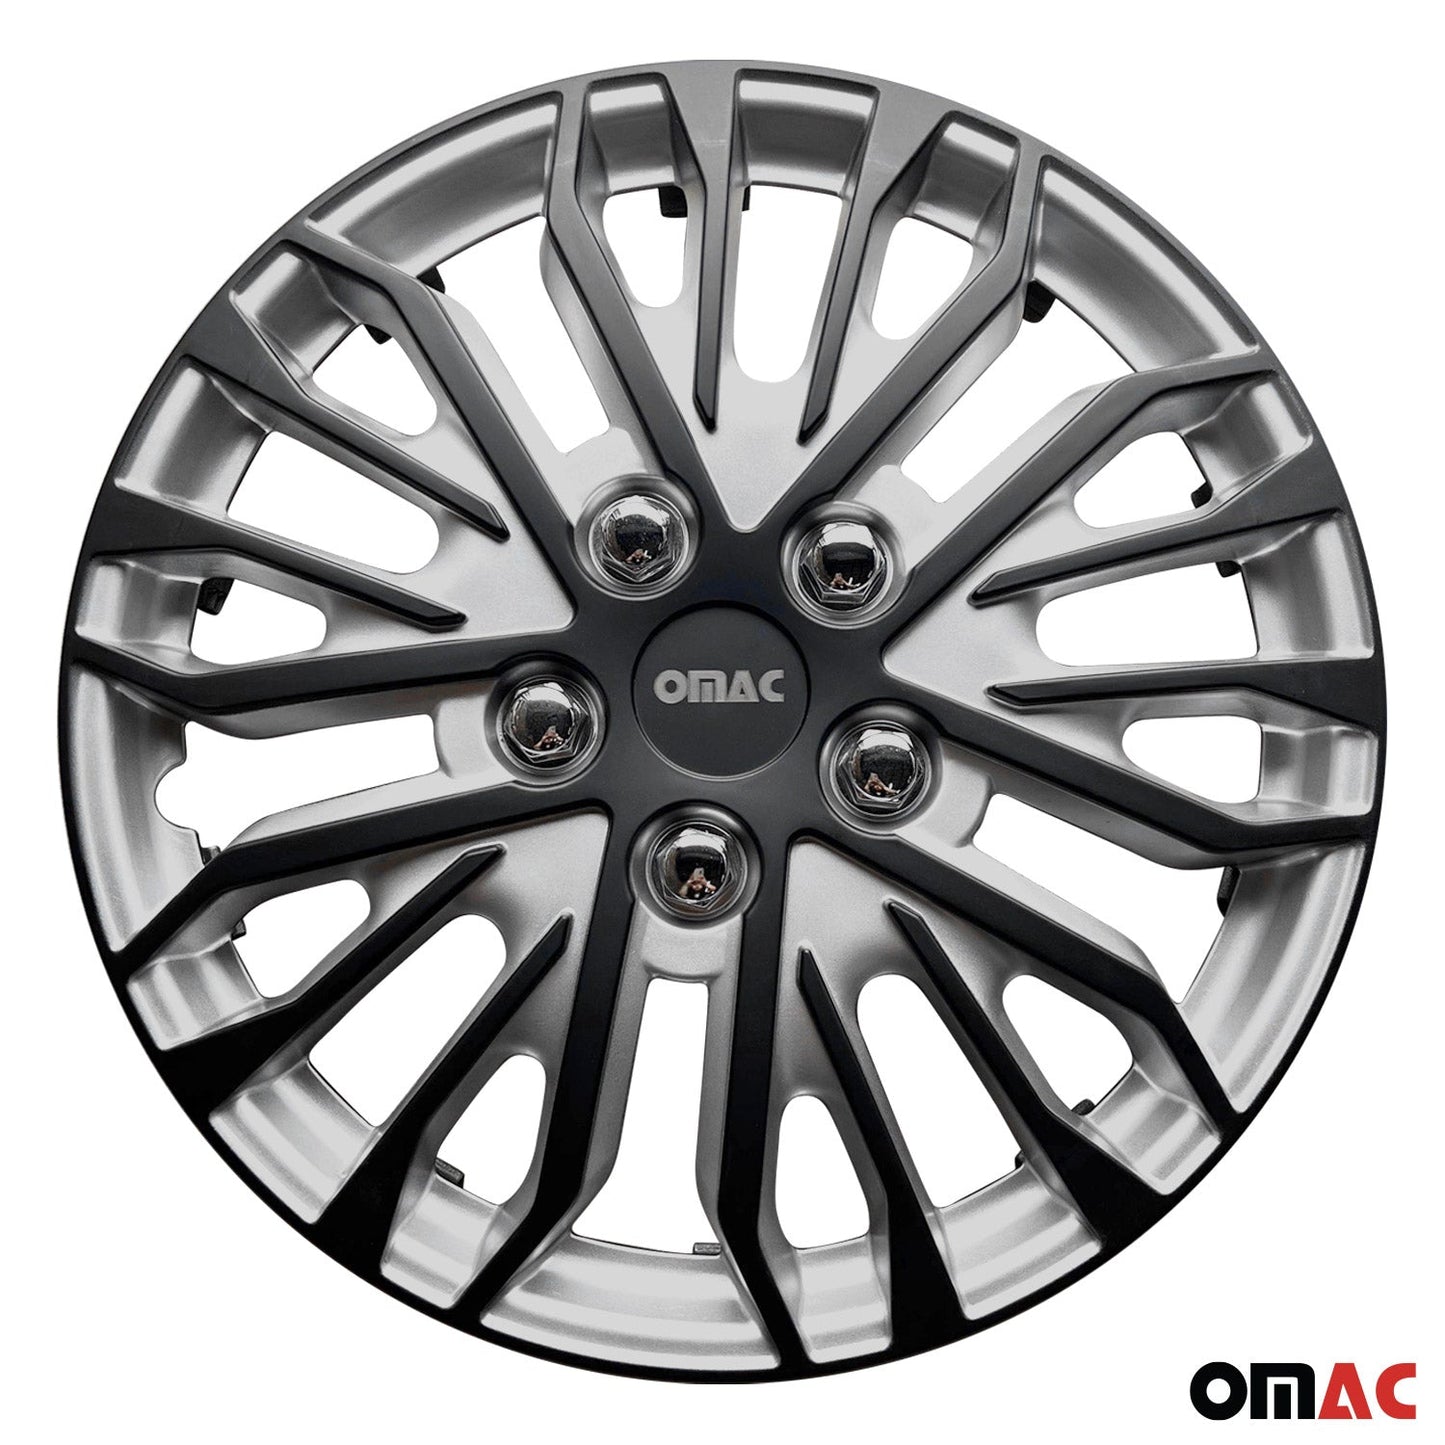 OMAC 17" Wheel Covers Guard Hub Caps Durable Snap On ABS Silver Matt Black 4x OMAC-WE41-SVMBK17